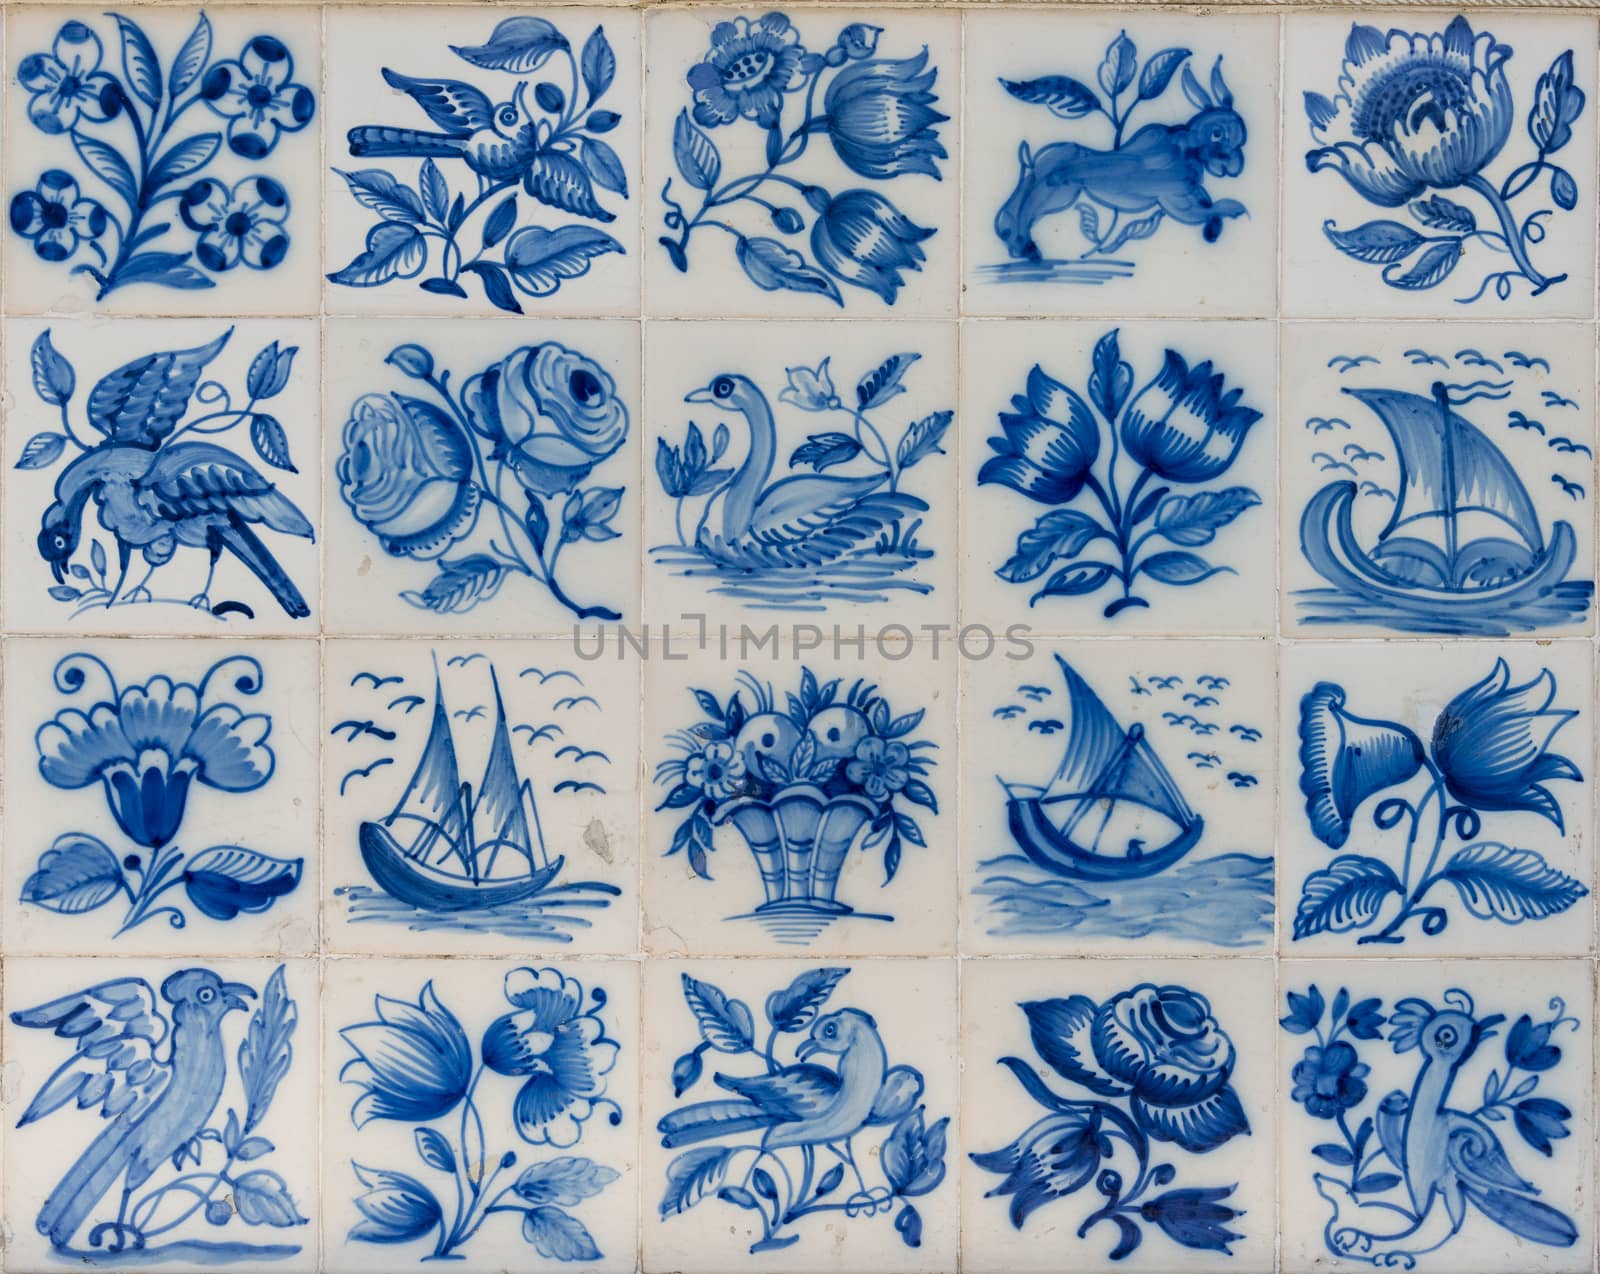 Ceramic azulejo tiles outside the old building in Lisbon, Portugal.